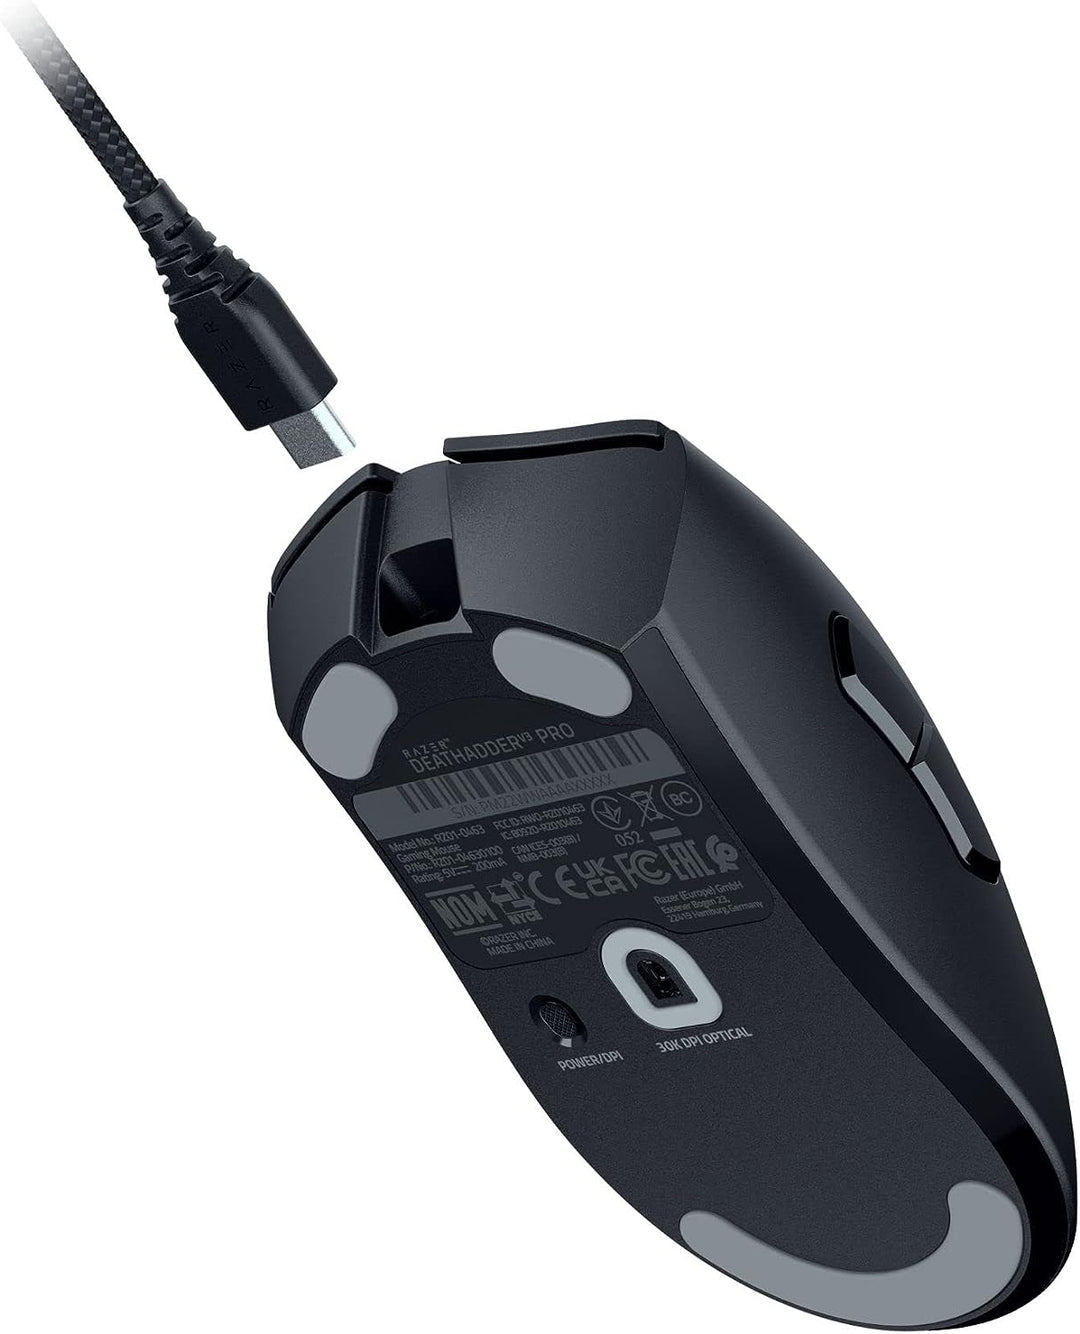 Razer | DeathAdder V3 Focus Pro 30K Optical Wireless Gaming Mouse - Black | RZ01-04630100-R3U1